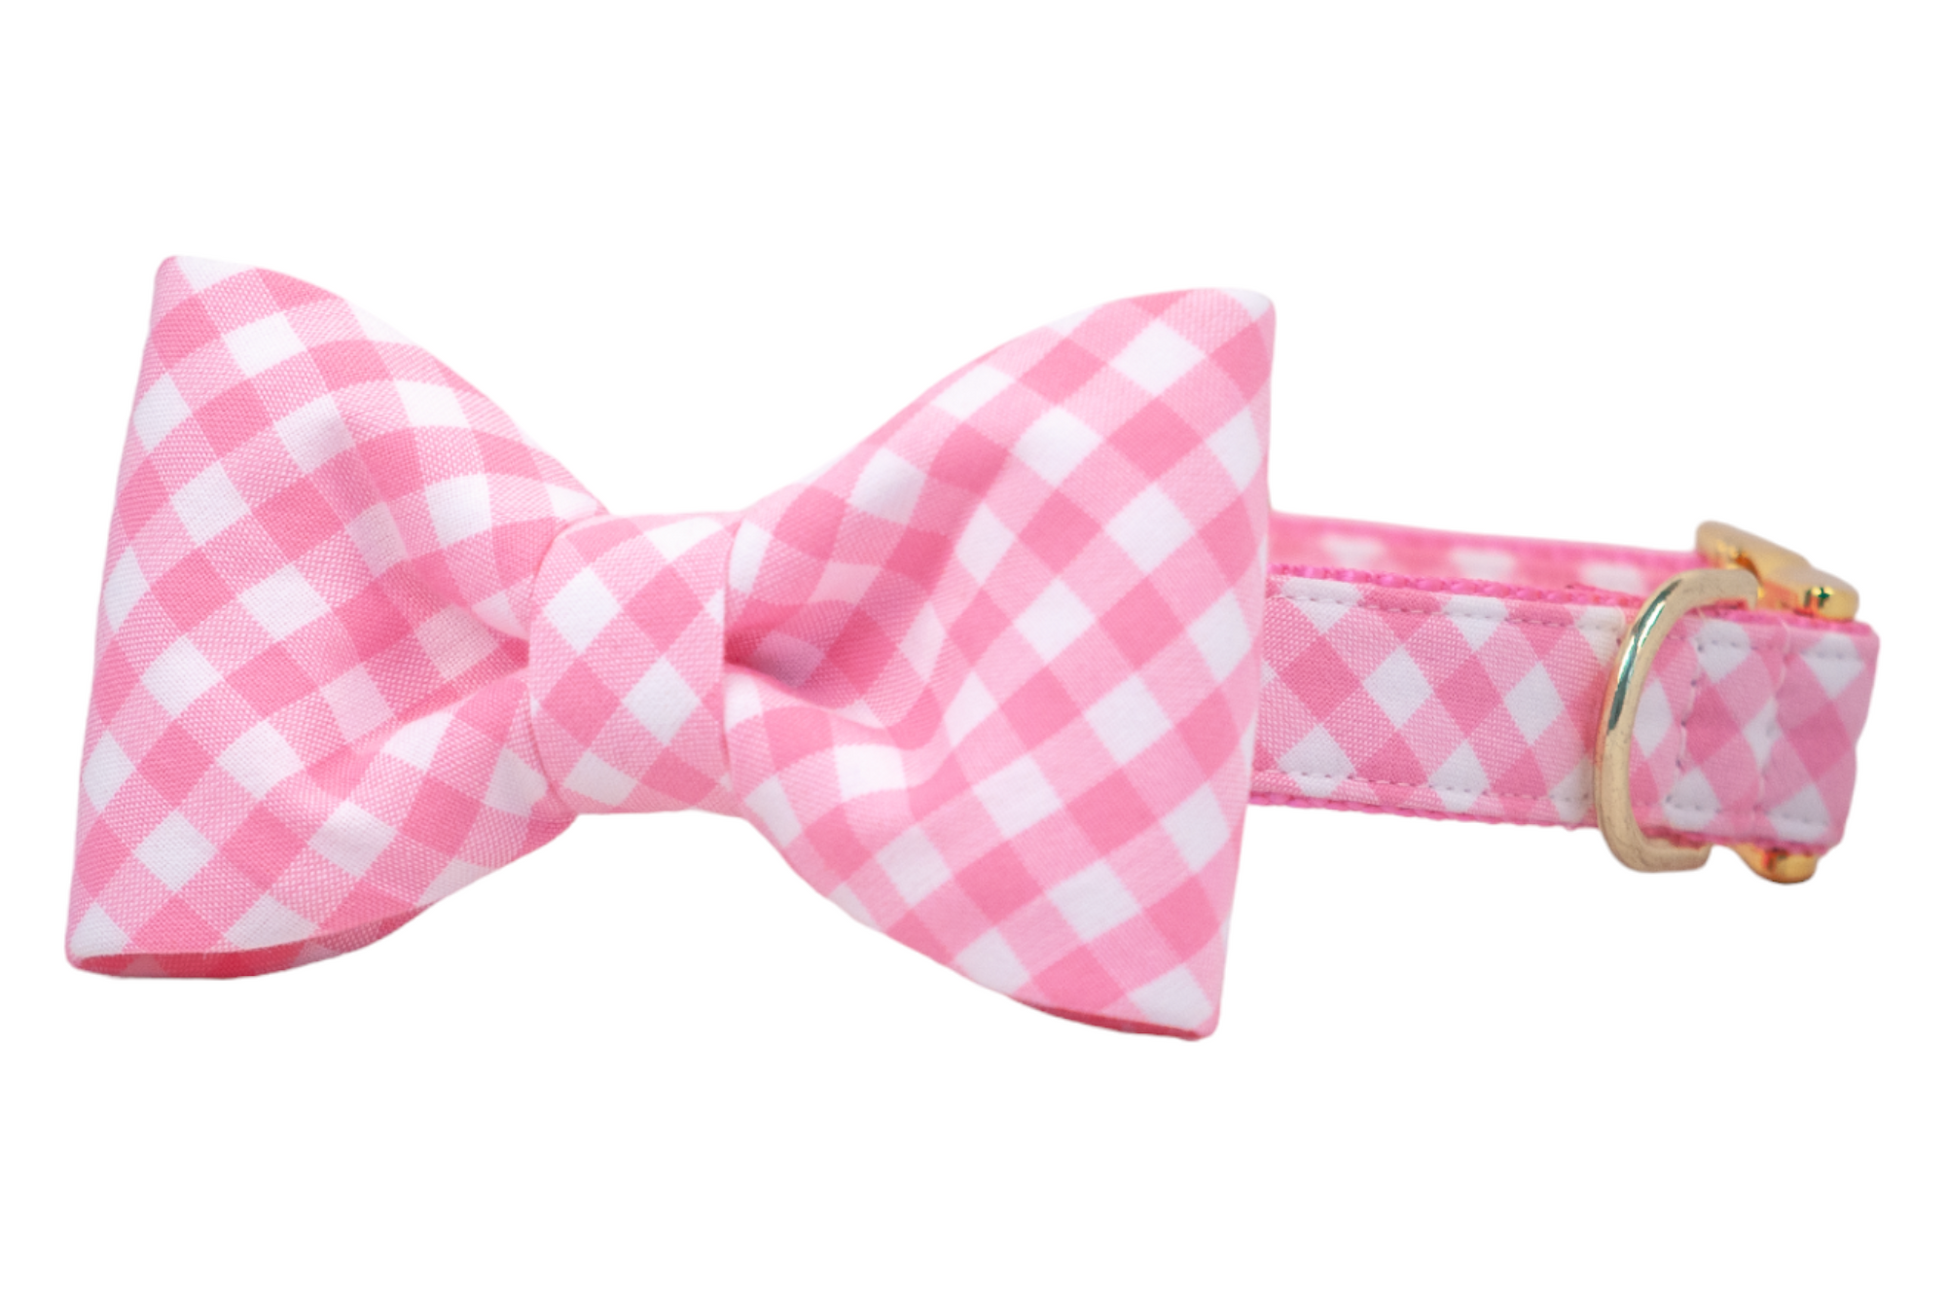 Pink Picnic Plaid Bow Tie Dog Collar - Crew LaLa